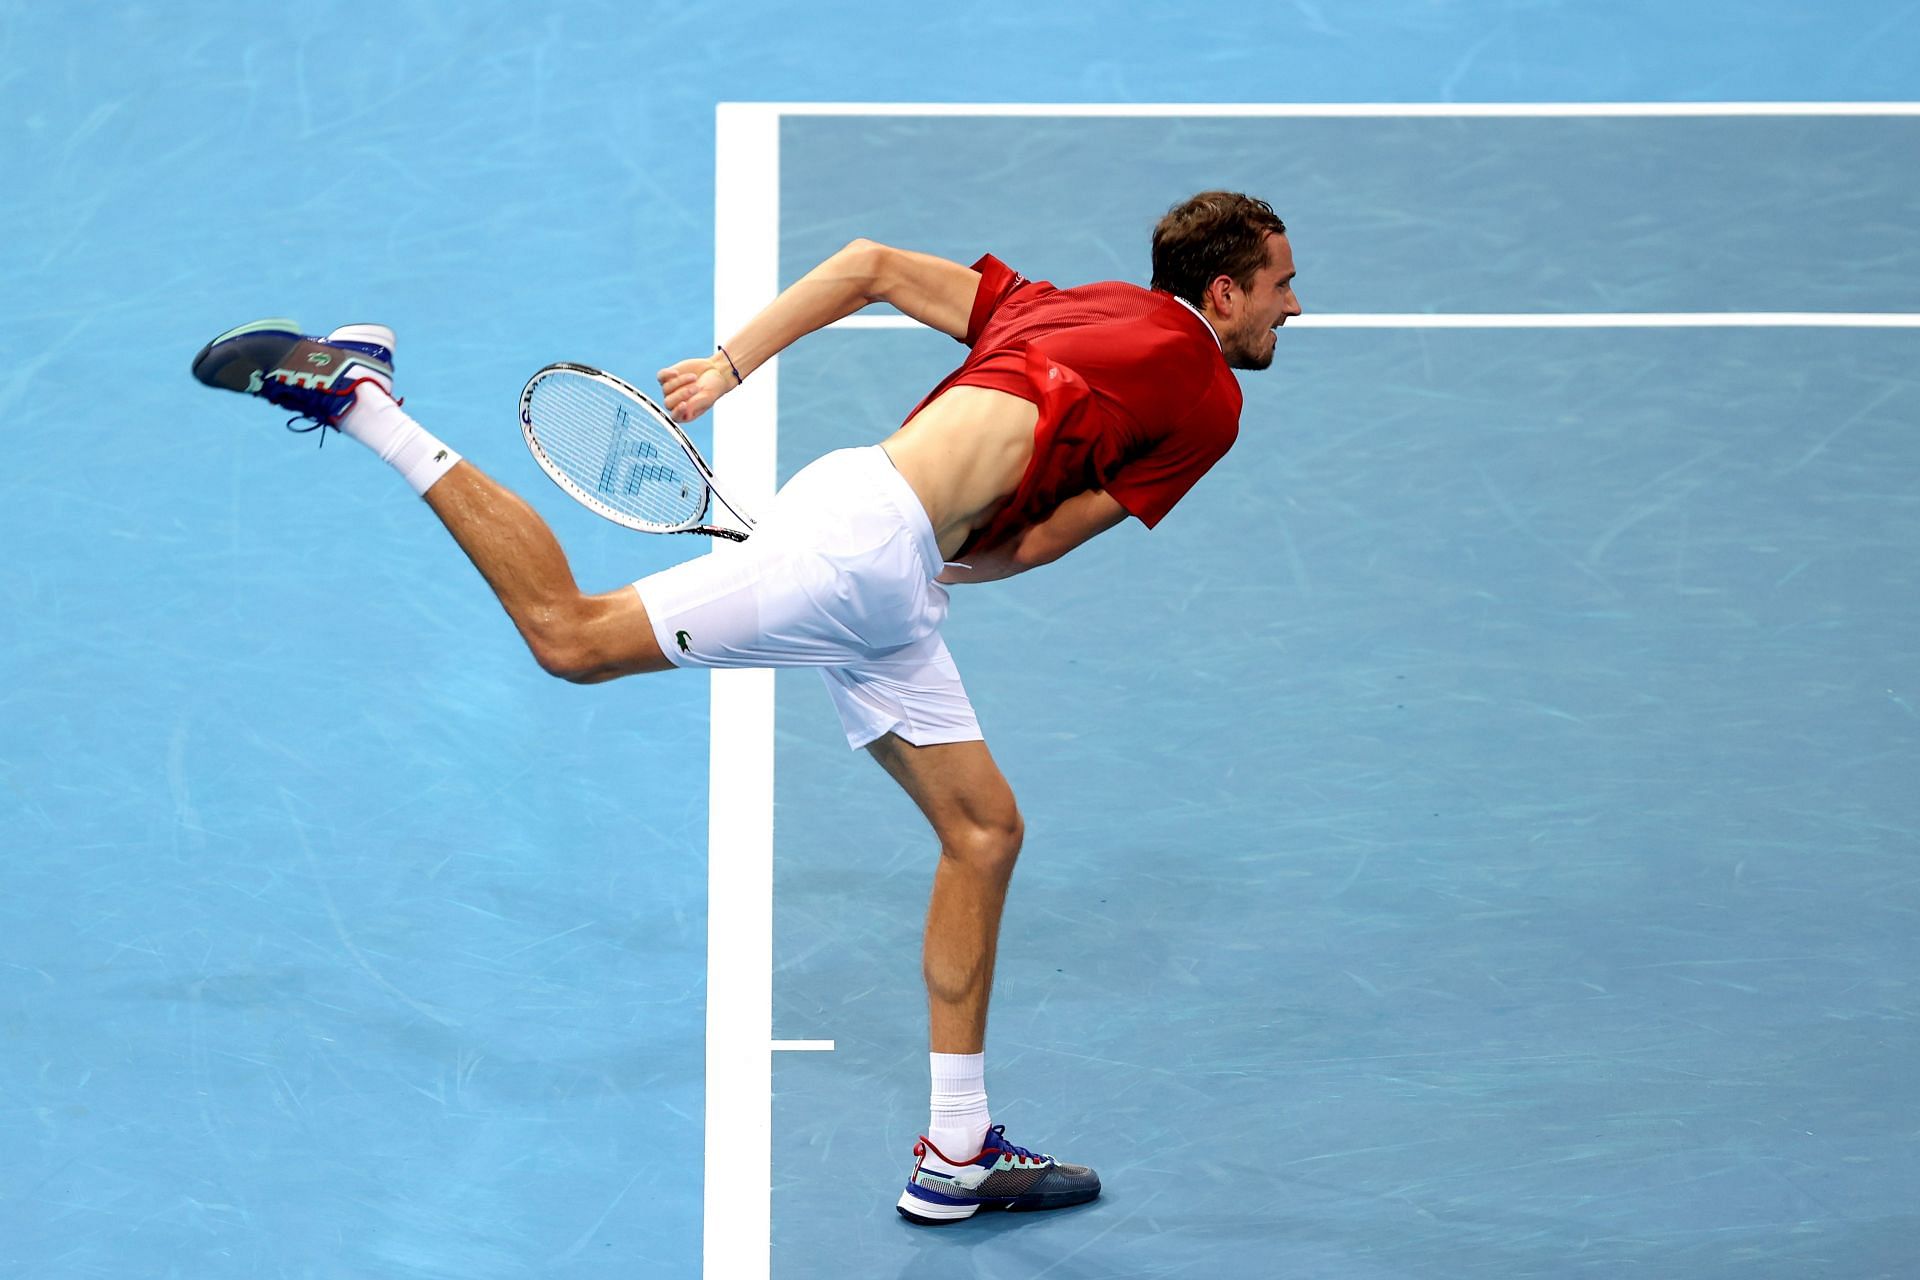 Daniil Medvedev was dominant throughout the match against Alex de Minaur